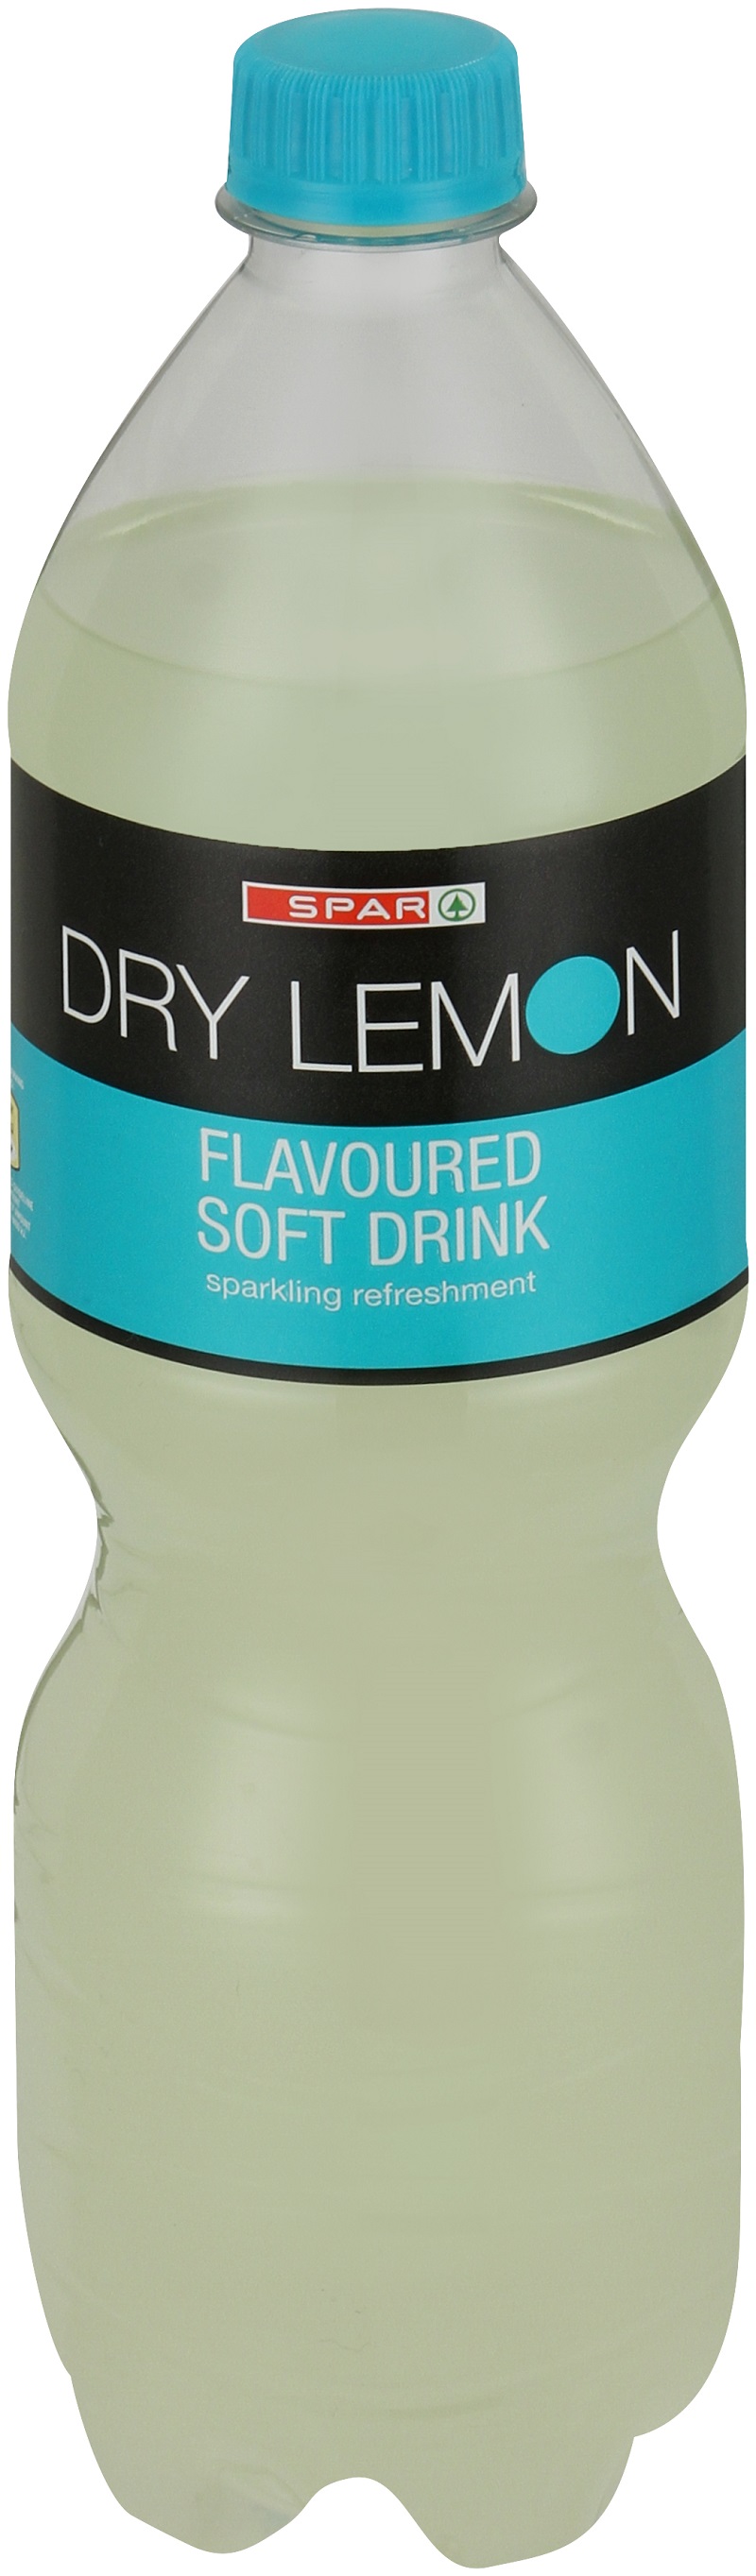 carbonated soft drink dry lemon